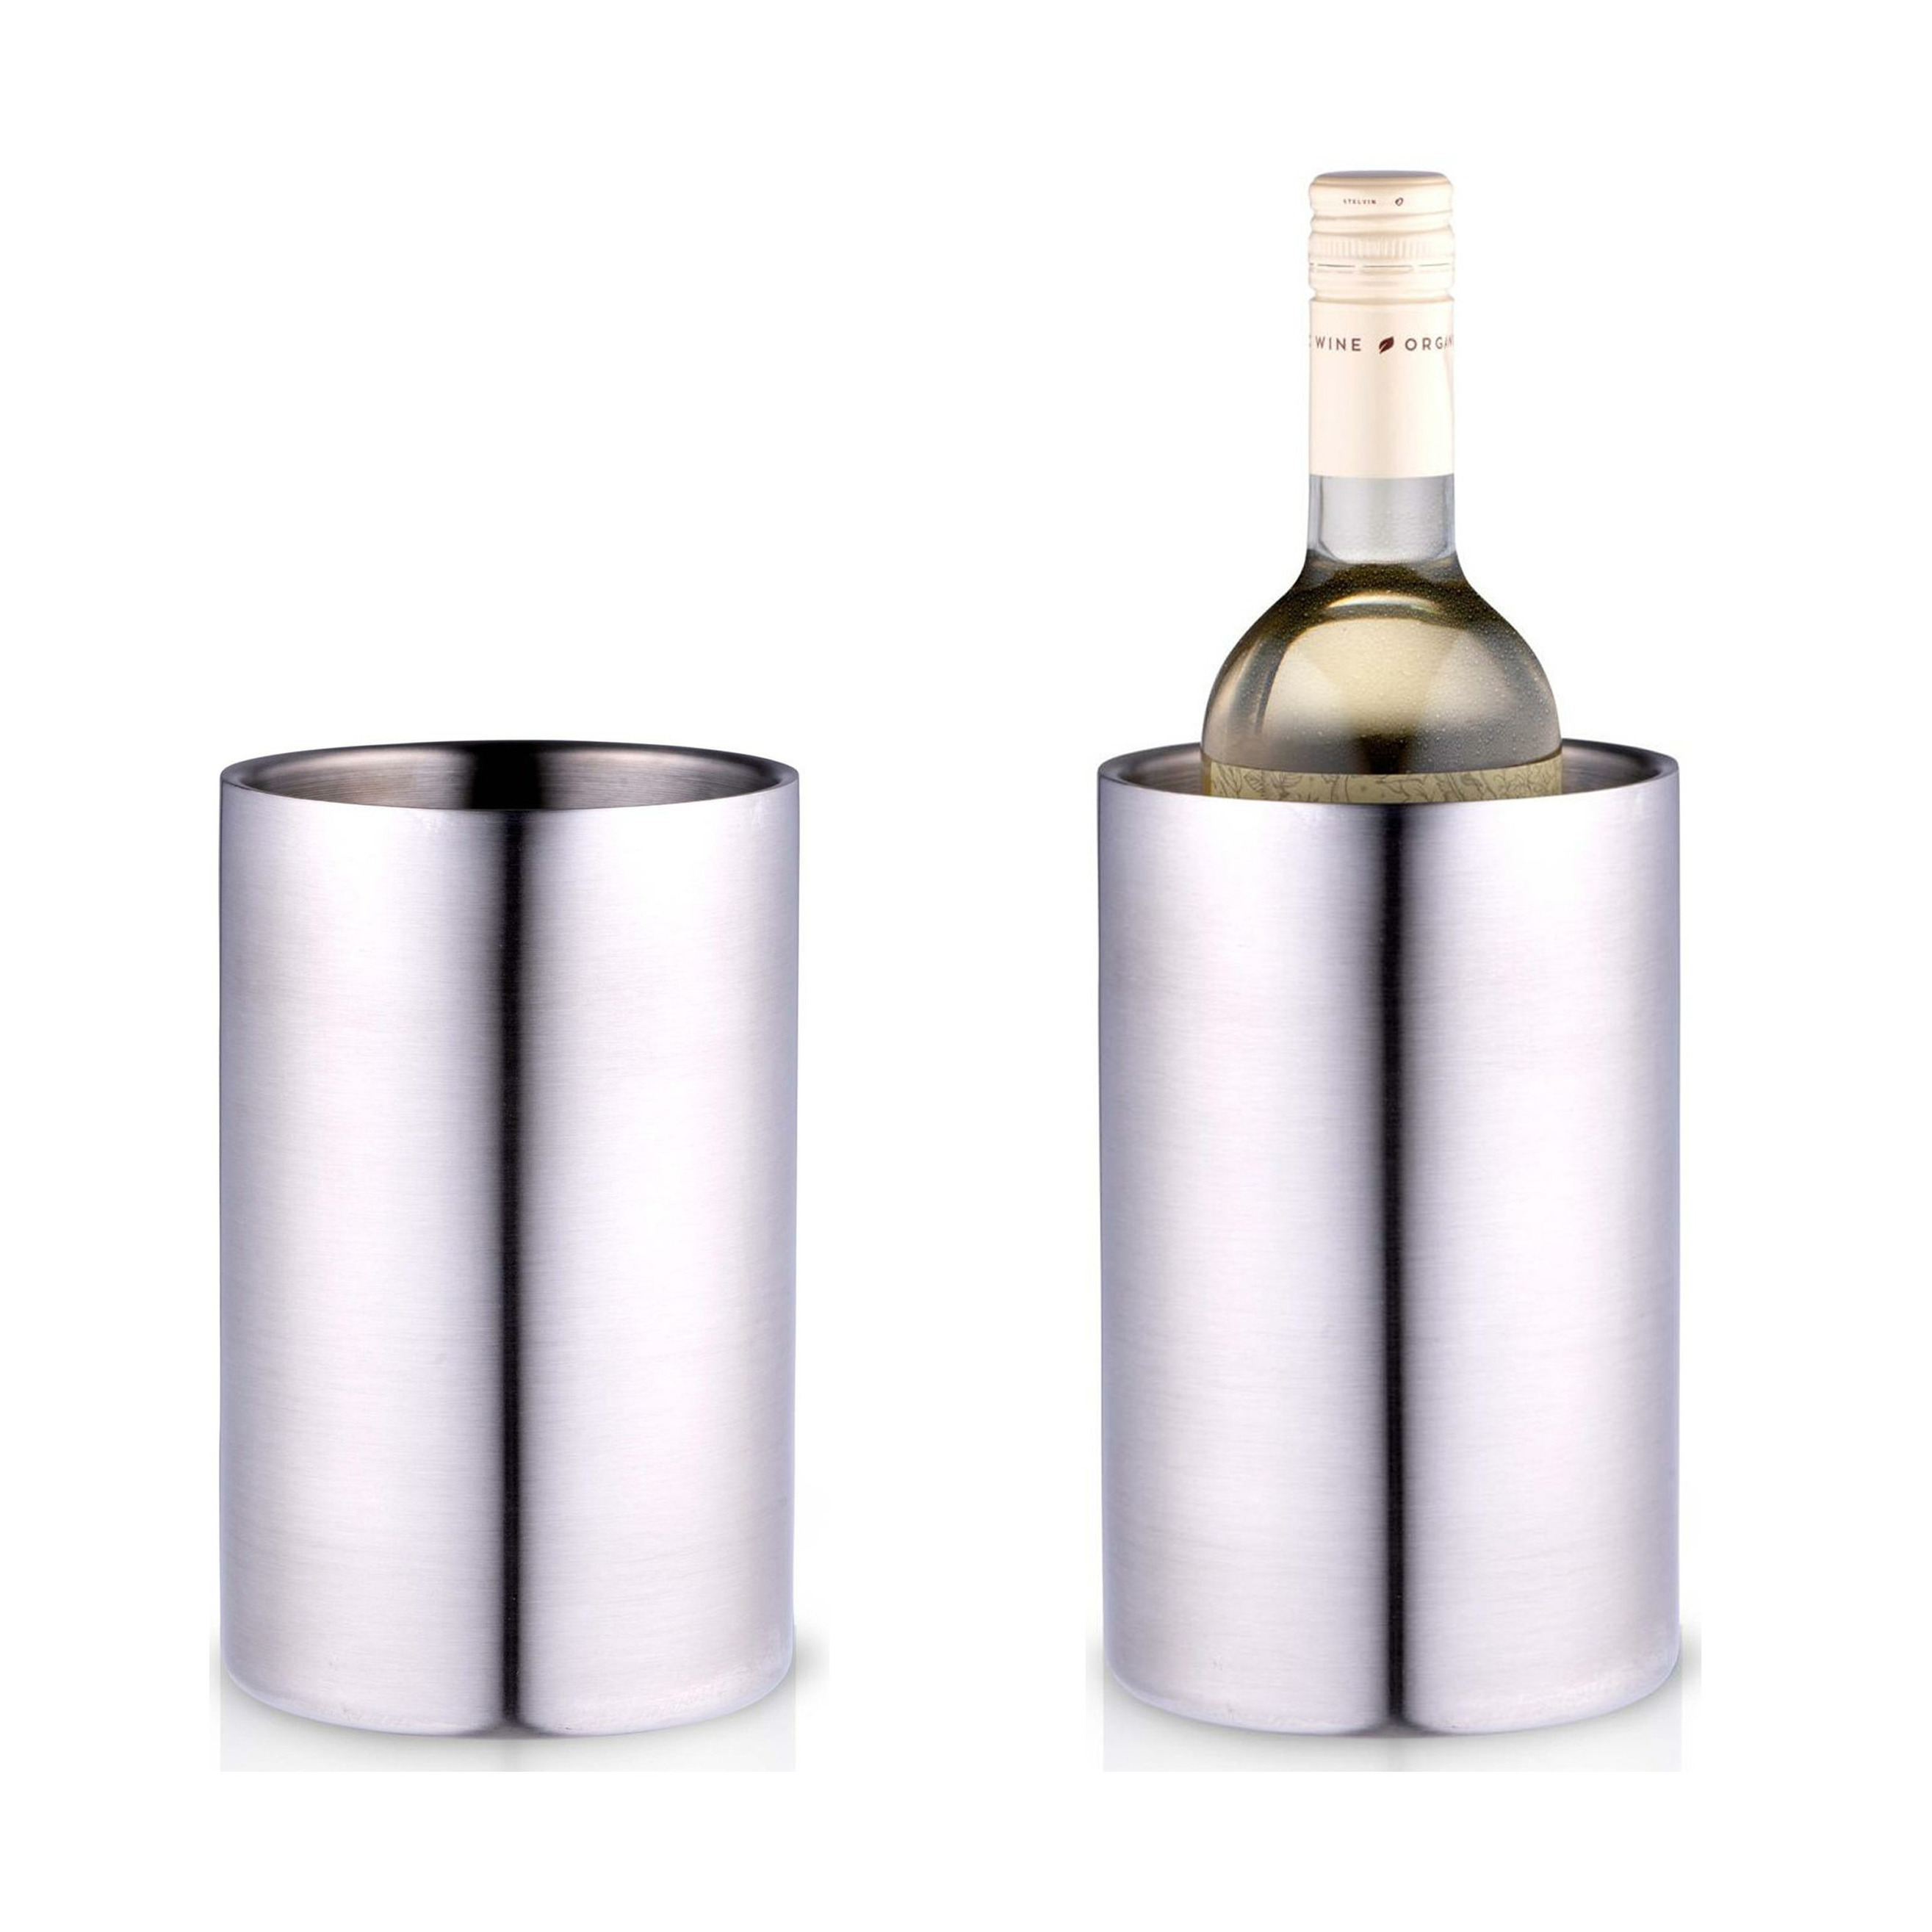 Alpina Champagne & wijnfles koeler-ijsemmer 2x zilver rvs H19 x D12 cm